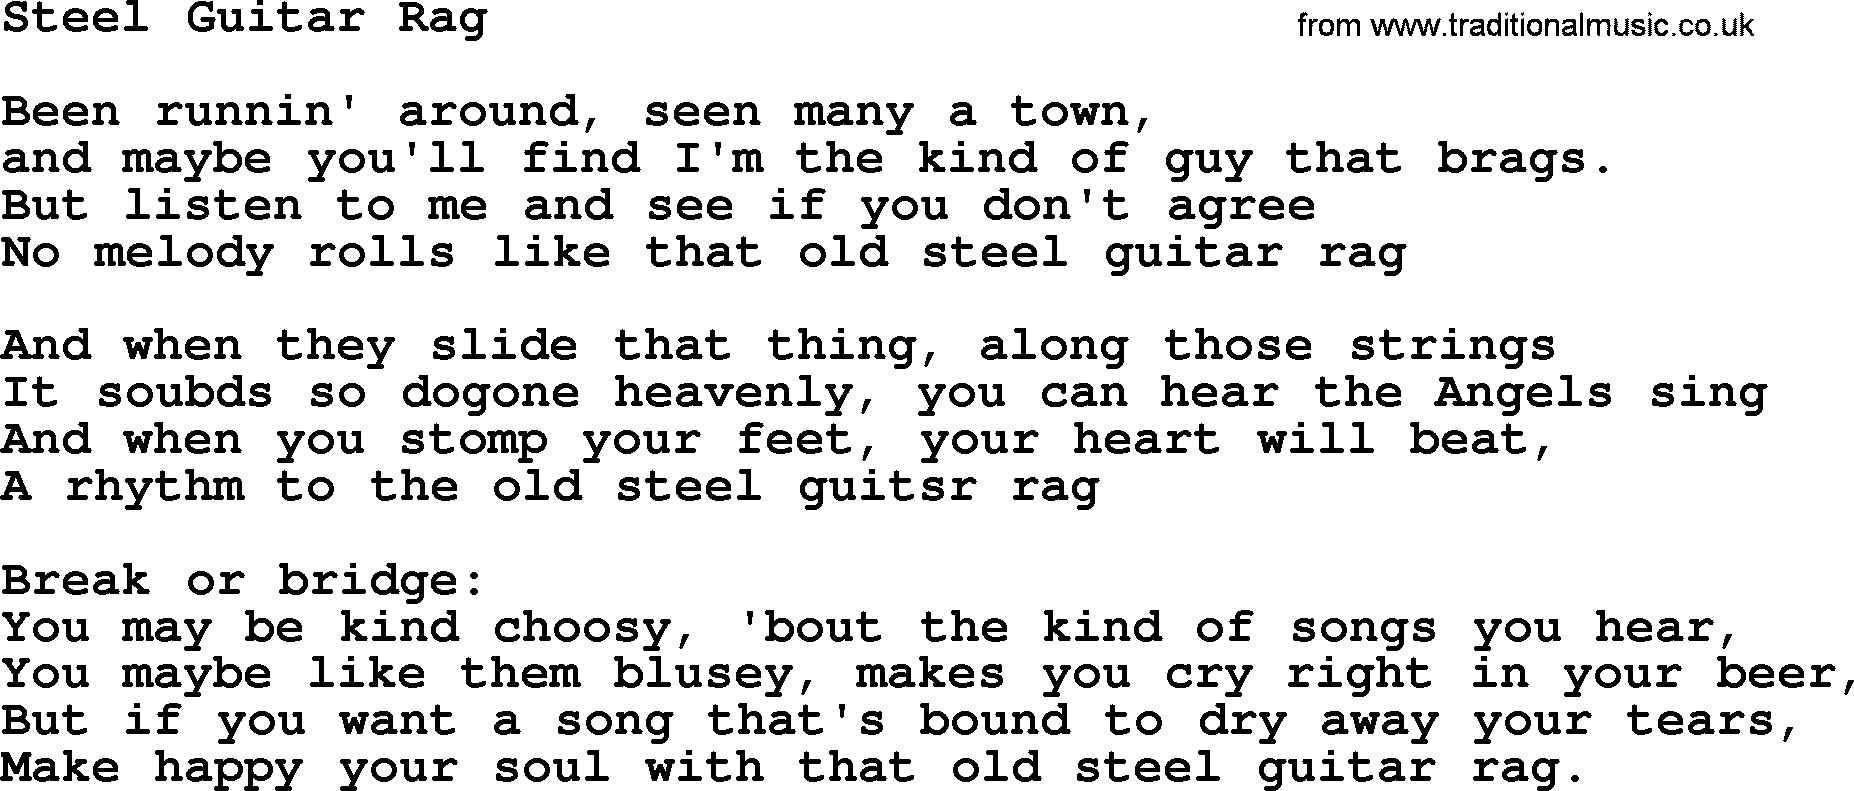 George Jones song: Steel Guitar Rag, lyrics